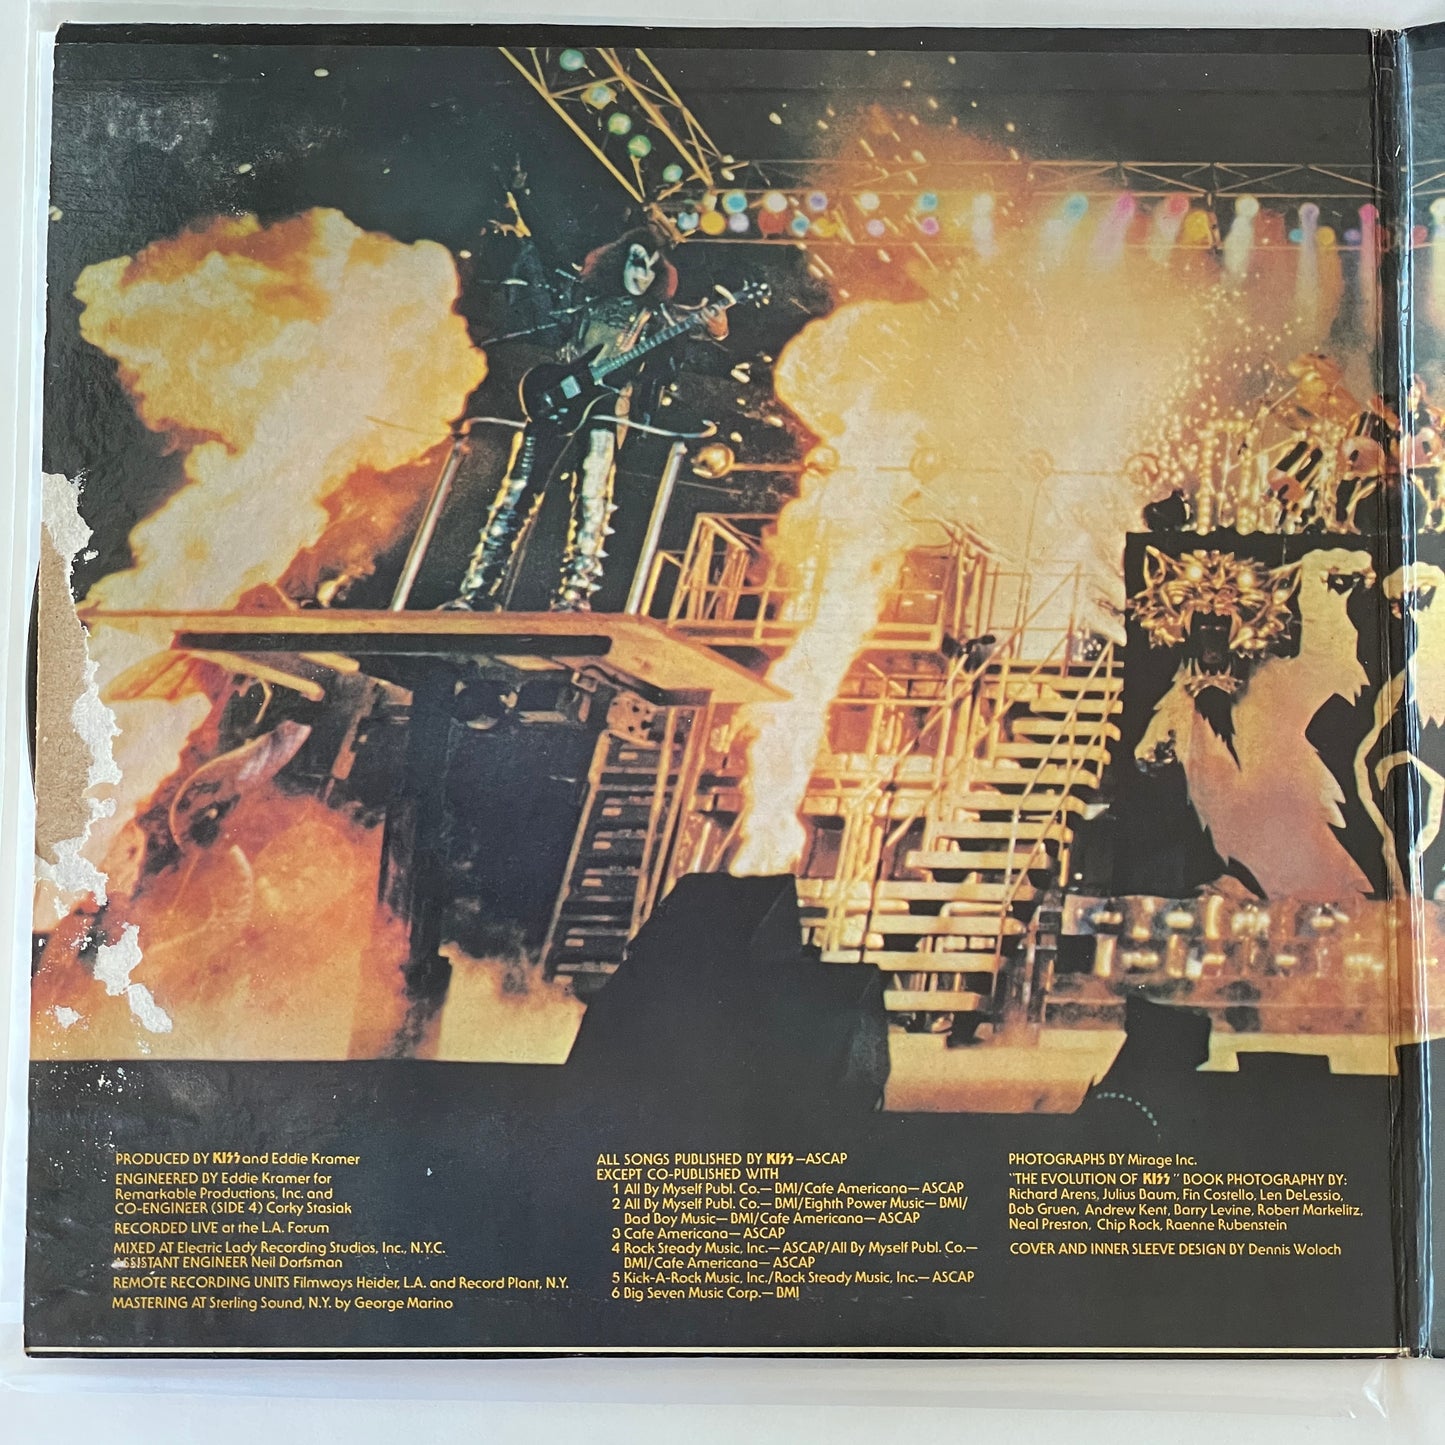 KISS - Alive II 1984 reissue 2xLP (used)